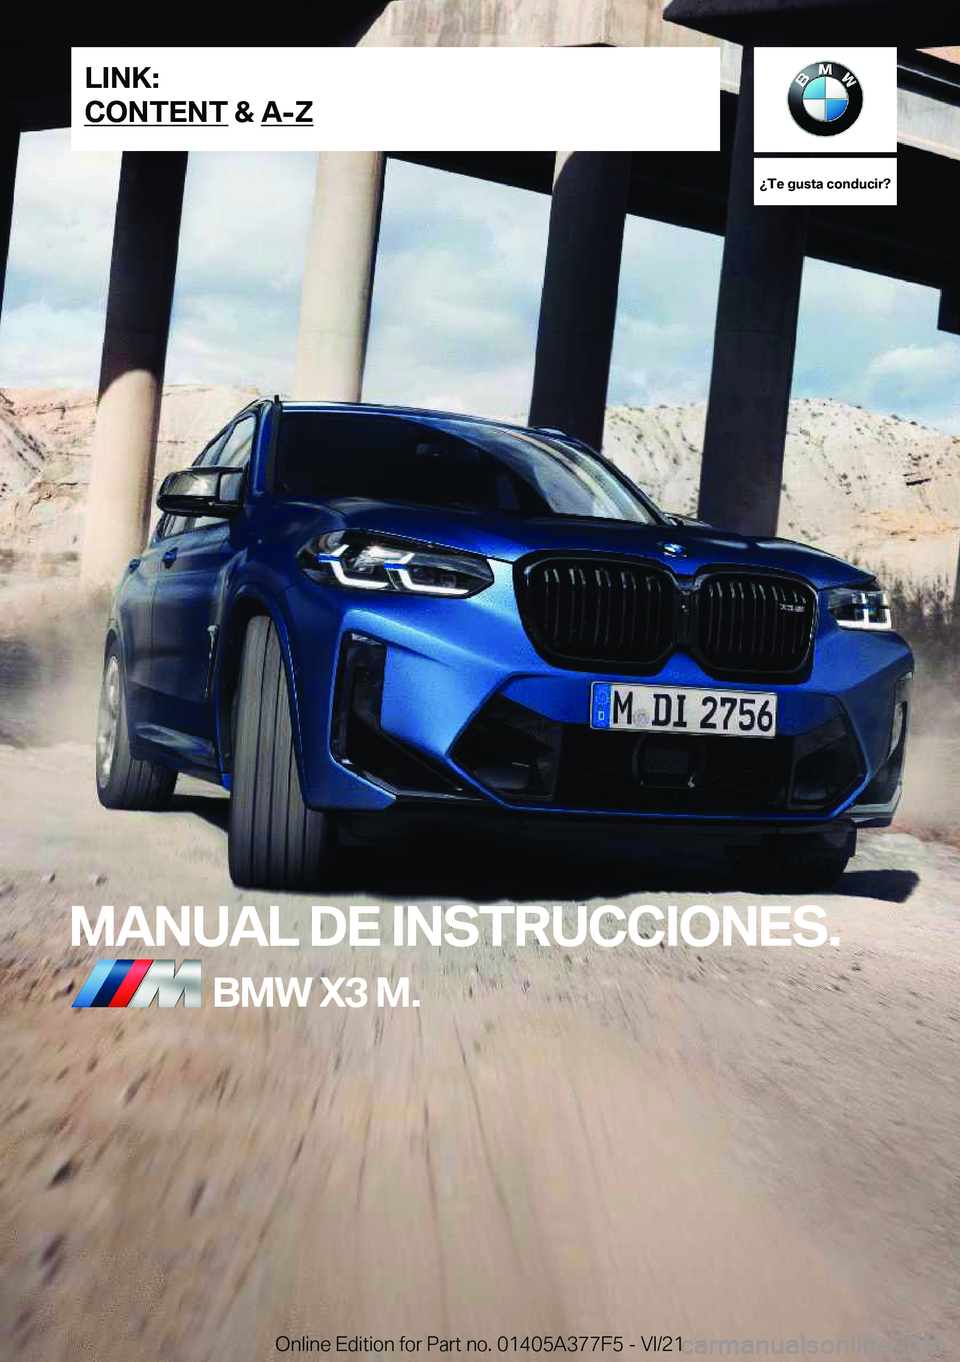 BMW X3 M 2022  Manuales de Empleo (in Spanish) ��T�e��g�u�s�t�a��c�o�n�d�u�c�i�r� 
�M�A�N�U�A�L��D�E��I�N�S�T�R�U�C�C�I�O�N�E�S�.�B�M�W��X�3��M�.�L�I�N�K�:
�C�O�N�T�E�N�T��&��A�-�Z�O�n�l�i�n�e��E�d�i�t�i�o�n��f�o�r��P�a�r�t��n�o�.��0